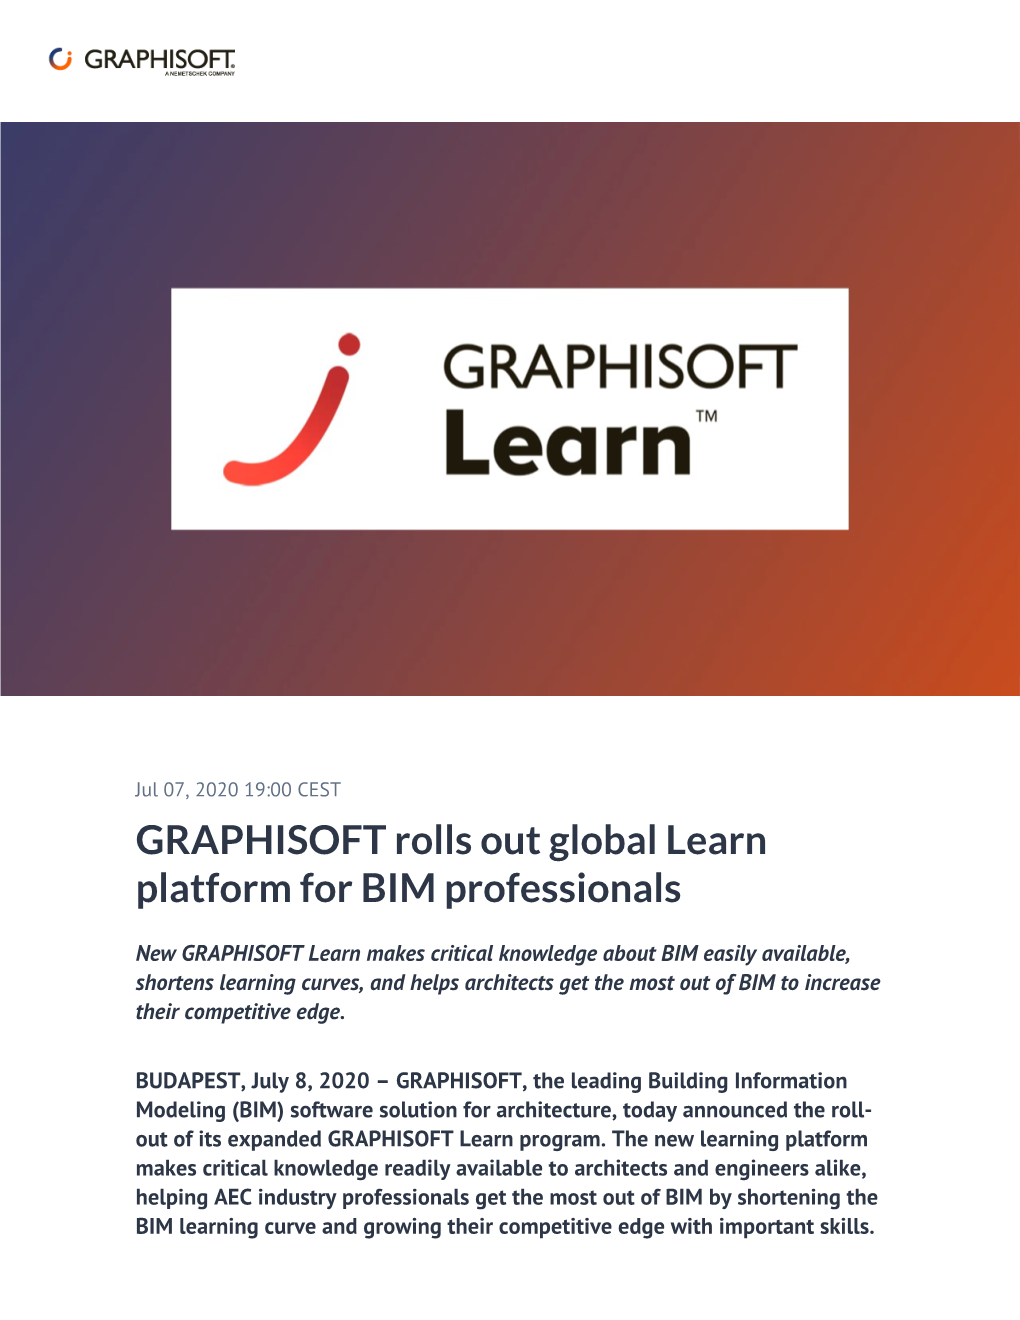 GRAPHISOFT Rolls out Global Learn Platform for BIM Professionals